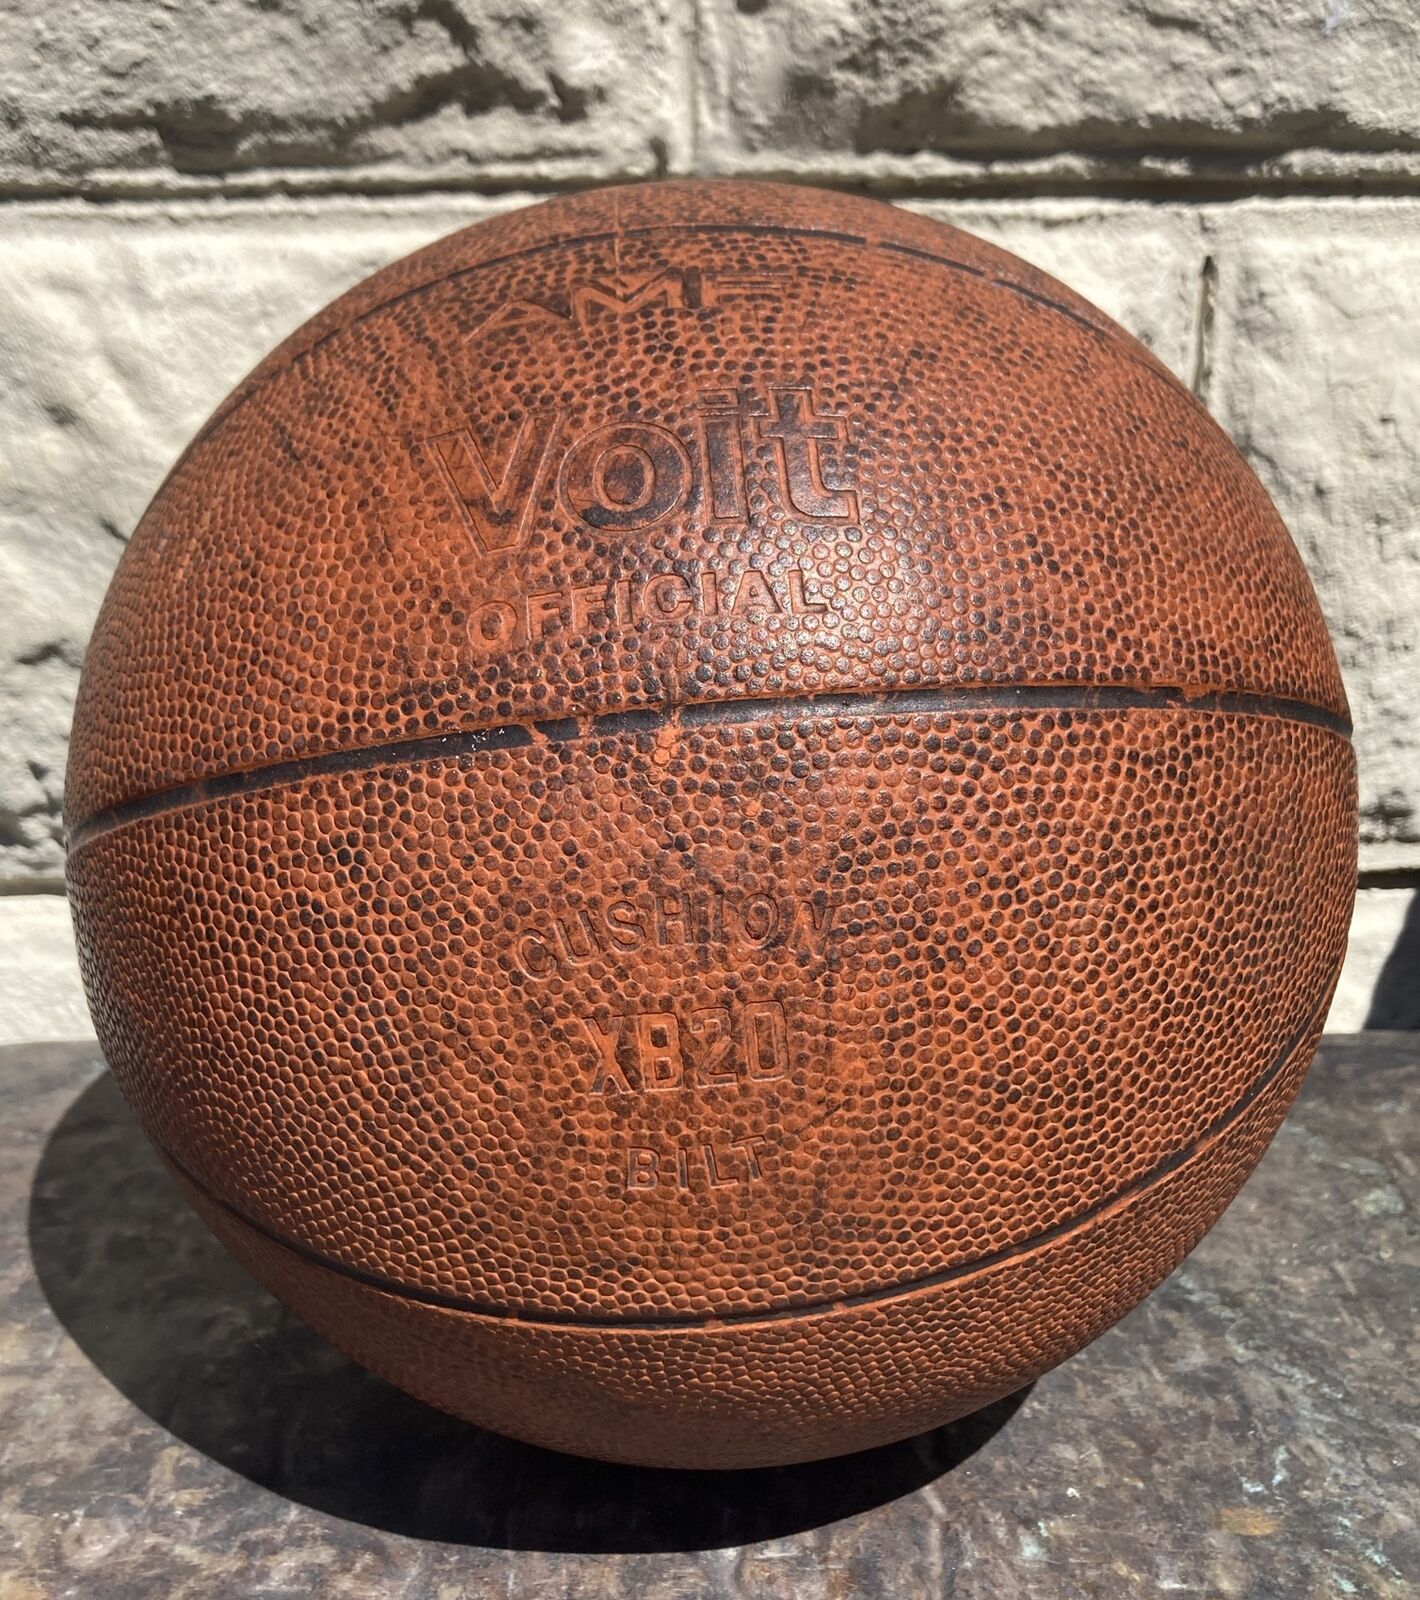 Vintage AMF Voit Basketball Rubber XB20 Mid 20th Century, Cushion Built ,Patina